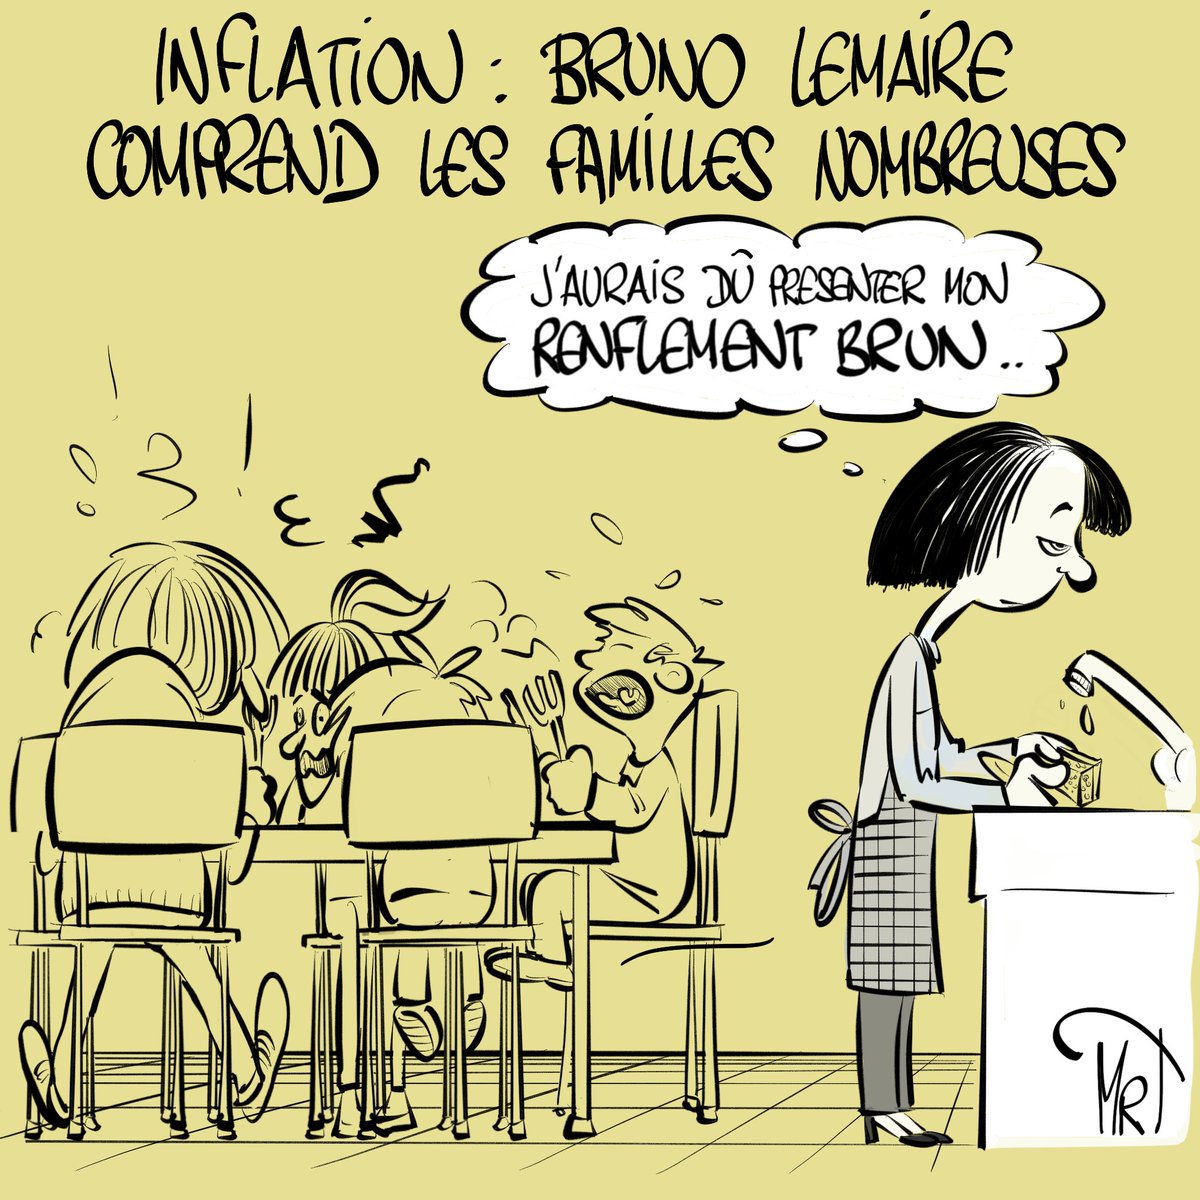 #BrunoLeMaire #RenflementBrun #DilateeCommeJamais #inflation